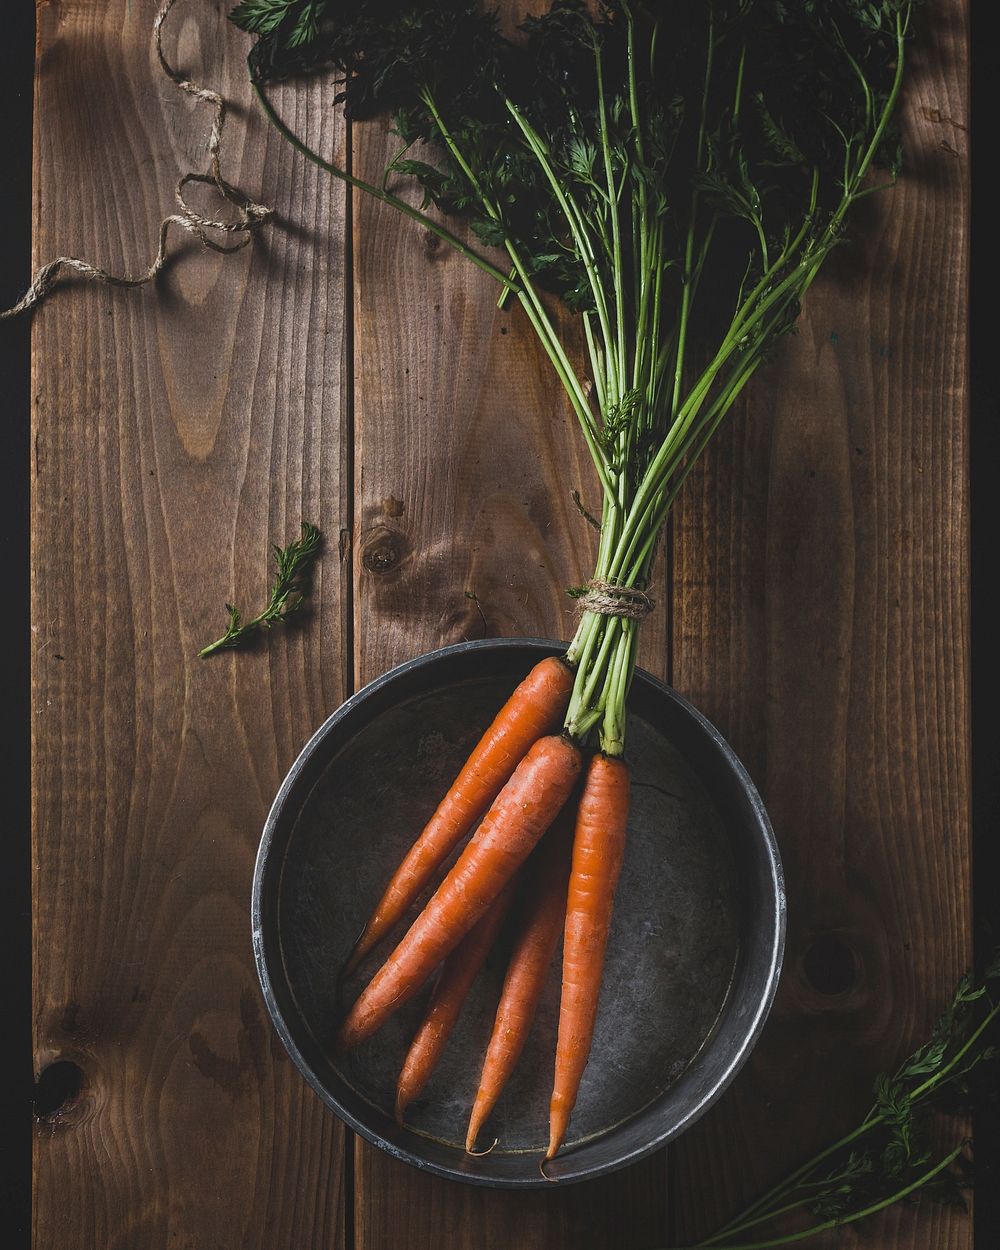 Free fresh carrots in a bowl photo, public domain vegetables CC0 image.